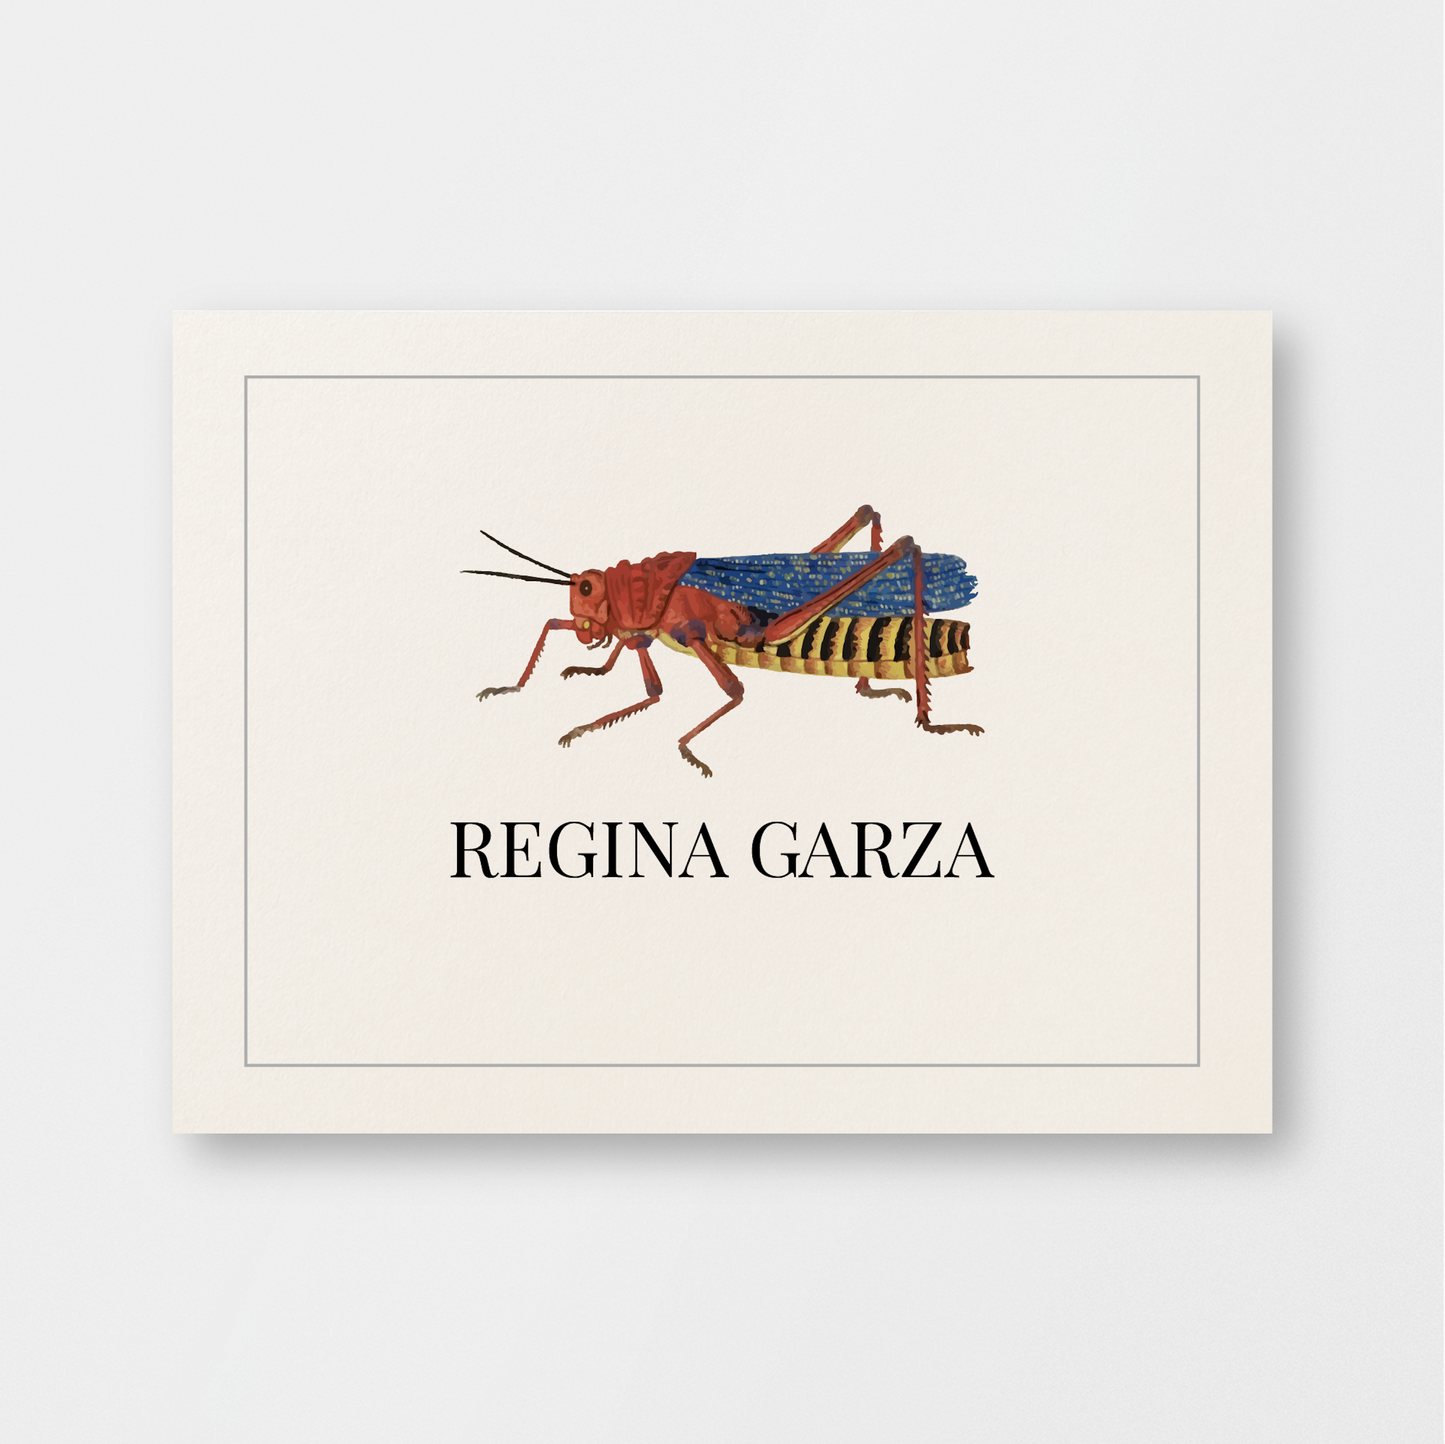 Grasshopper Card